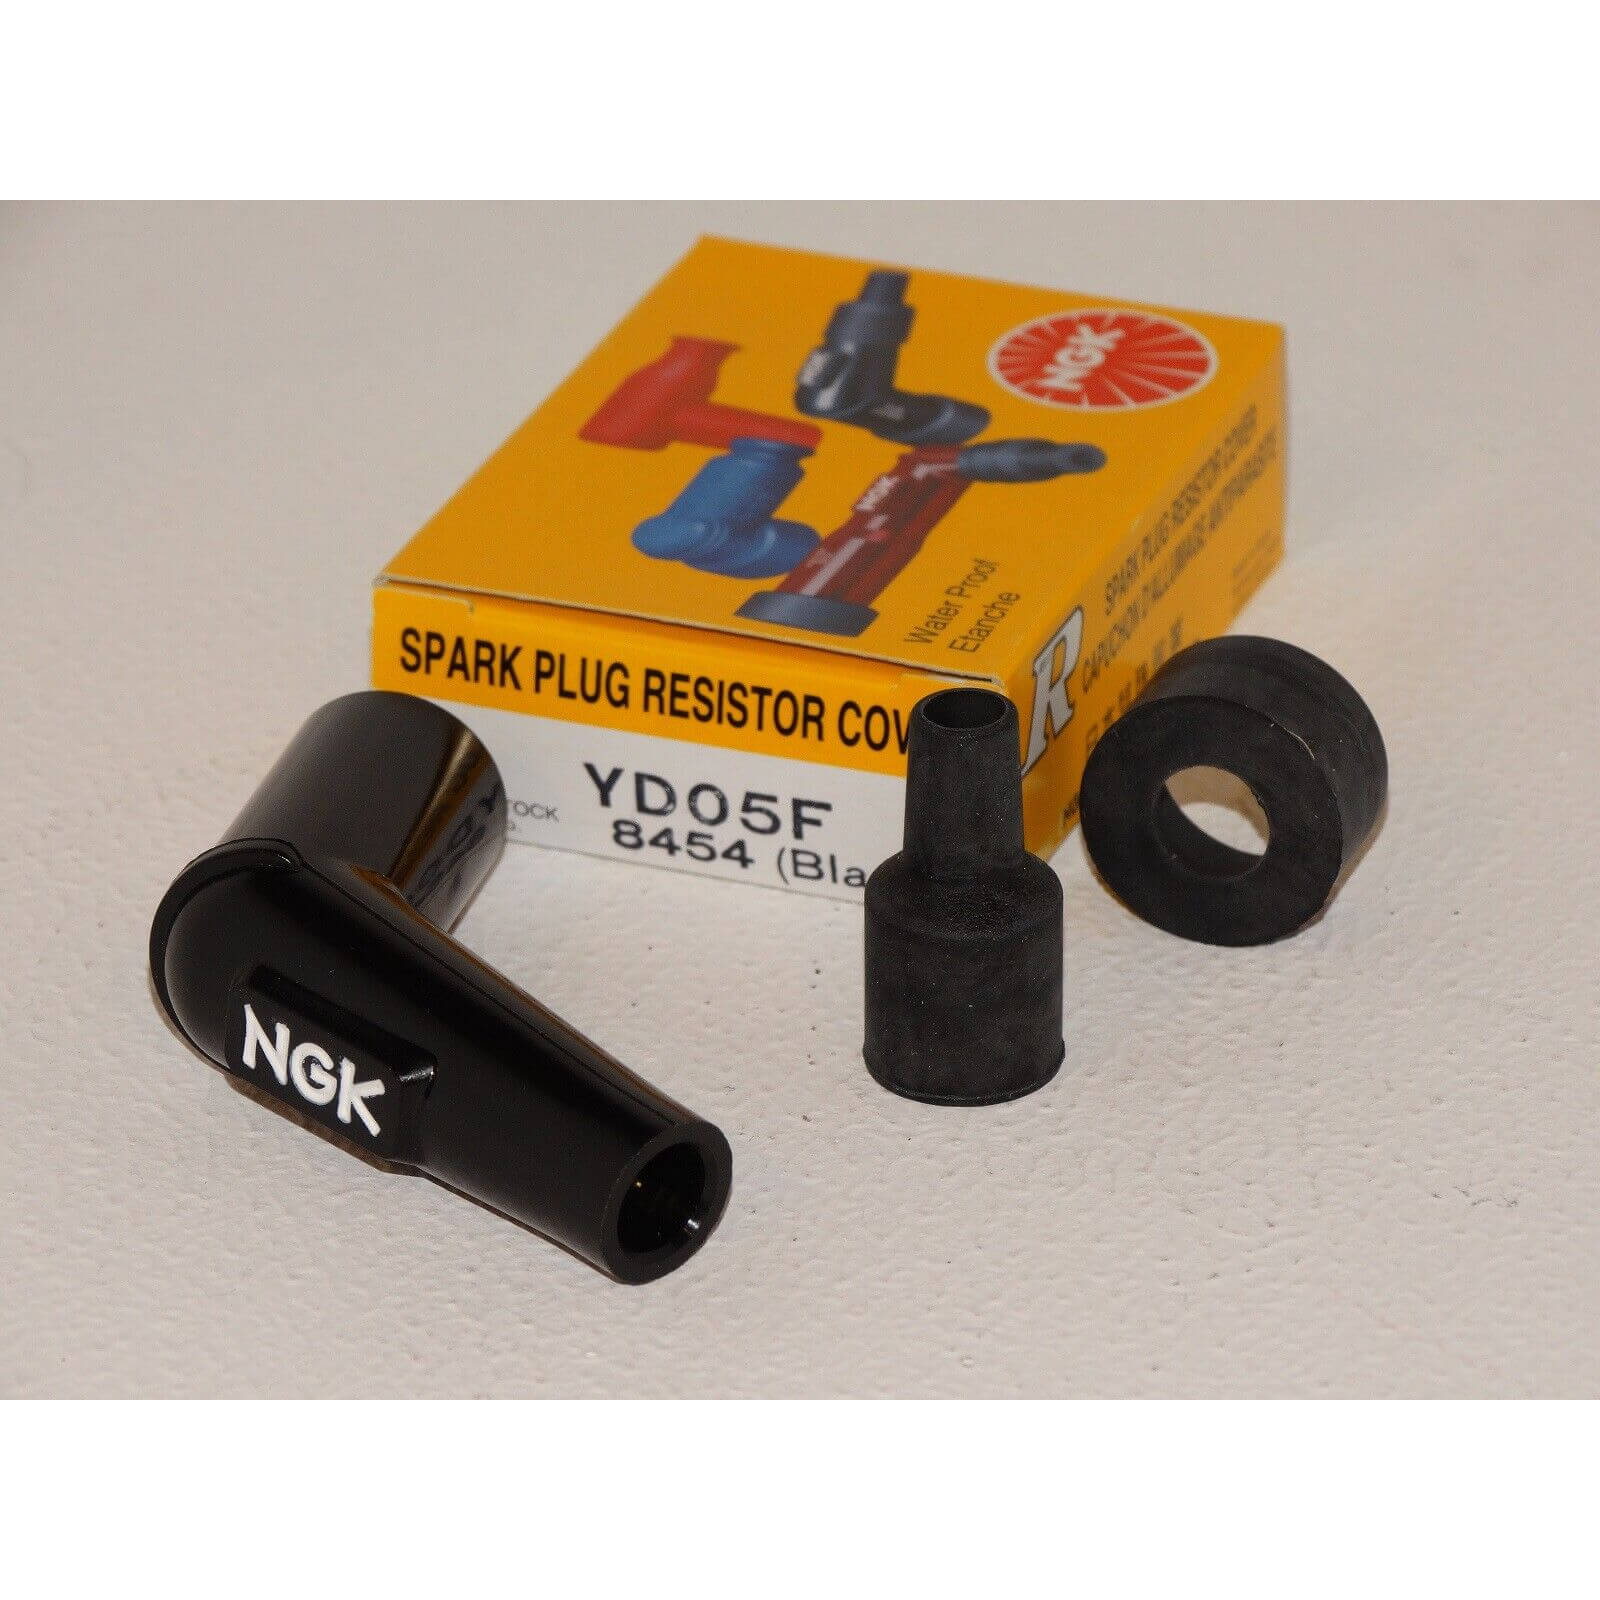 ngk Plug connector YD-05 F, for 12 mm plug, 120°